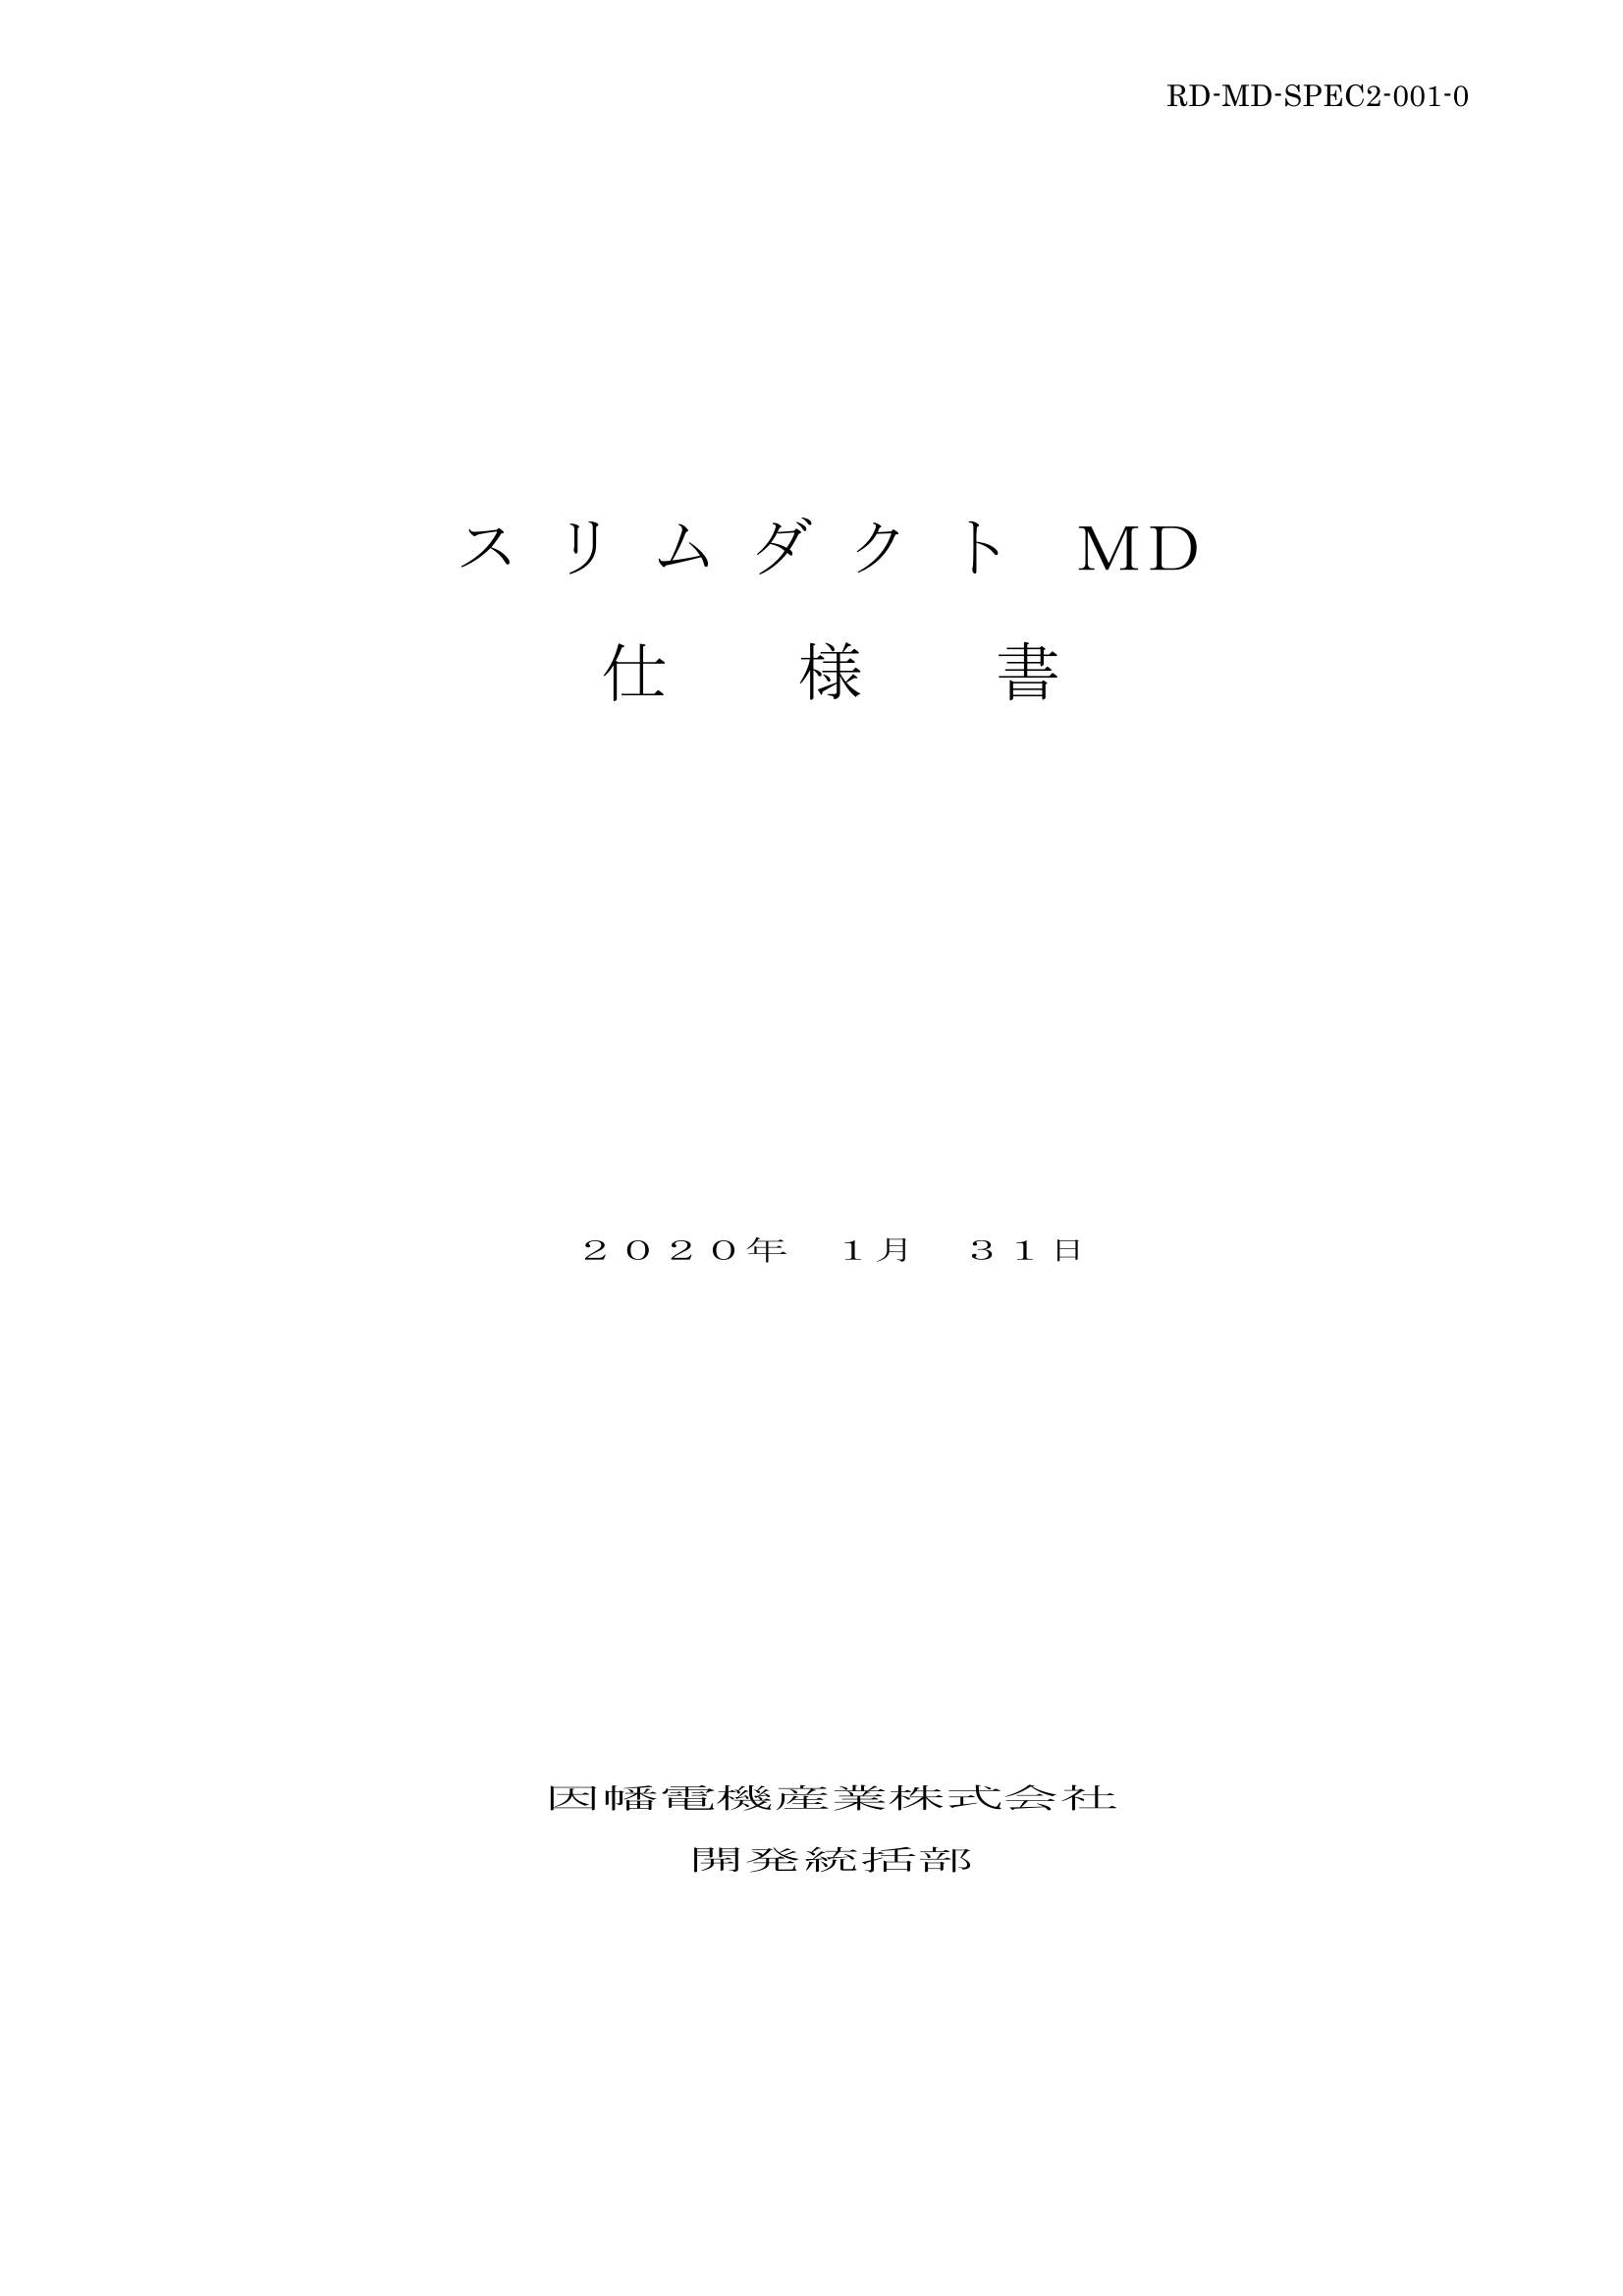 MD_仕様書_20200131.pdf